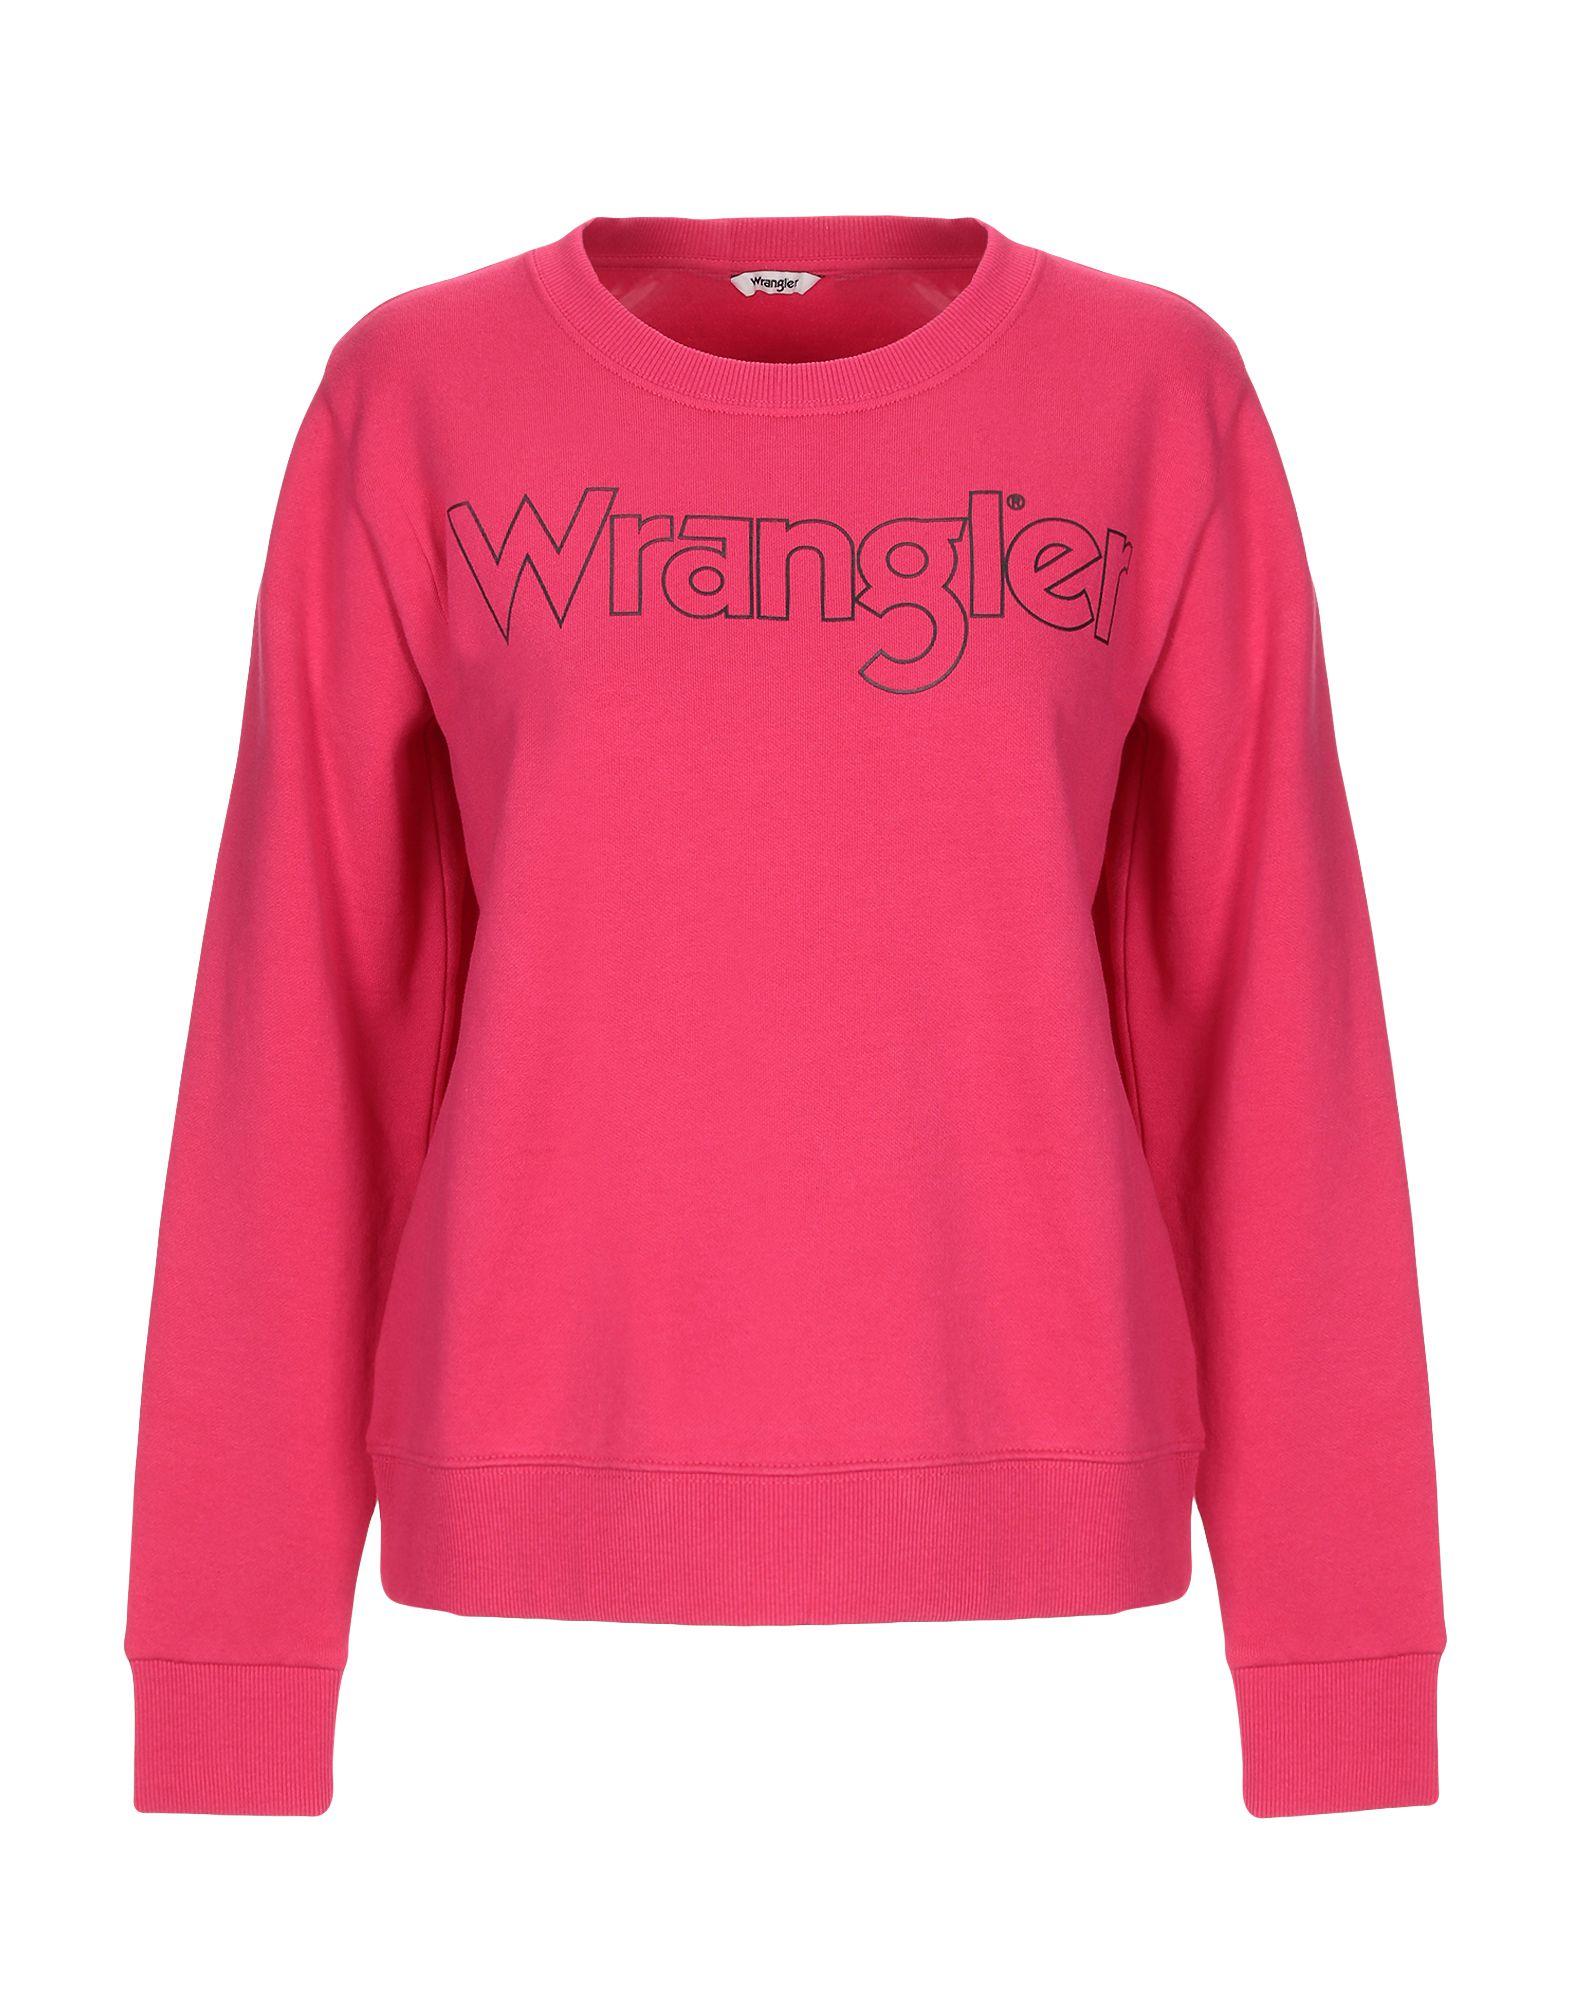 Wrangler Fleece Sweatshirt in Fuchsia (Pink) - Lyst